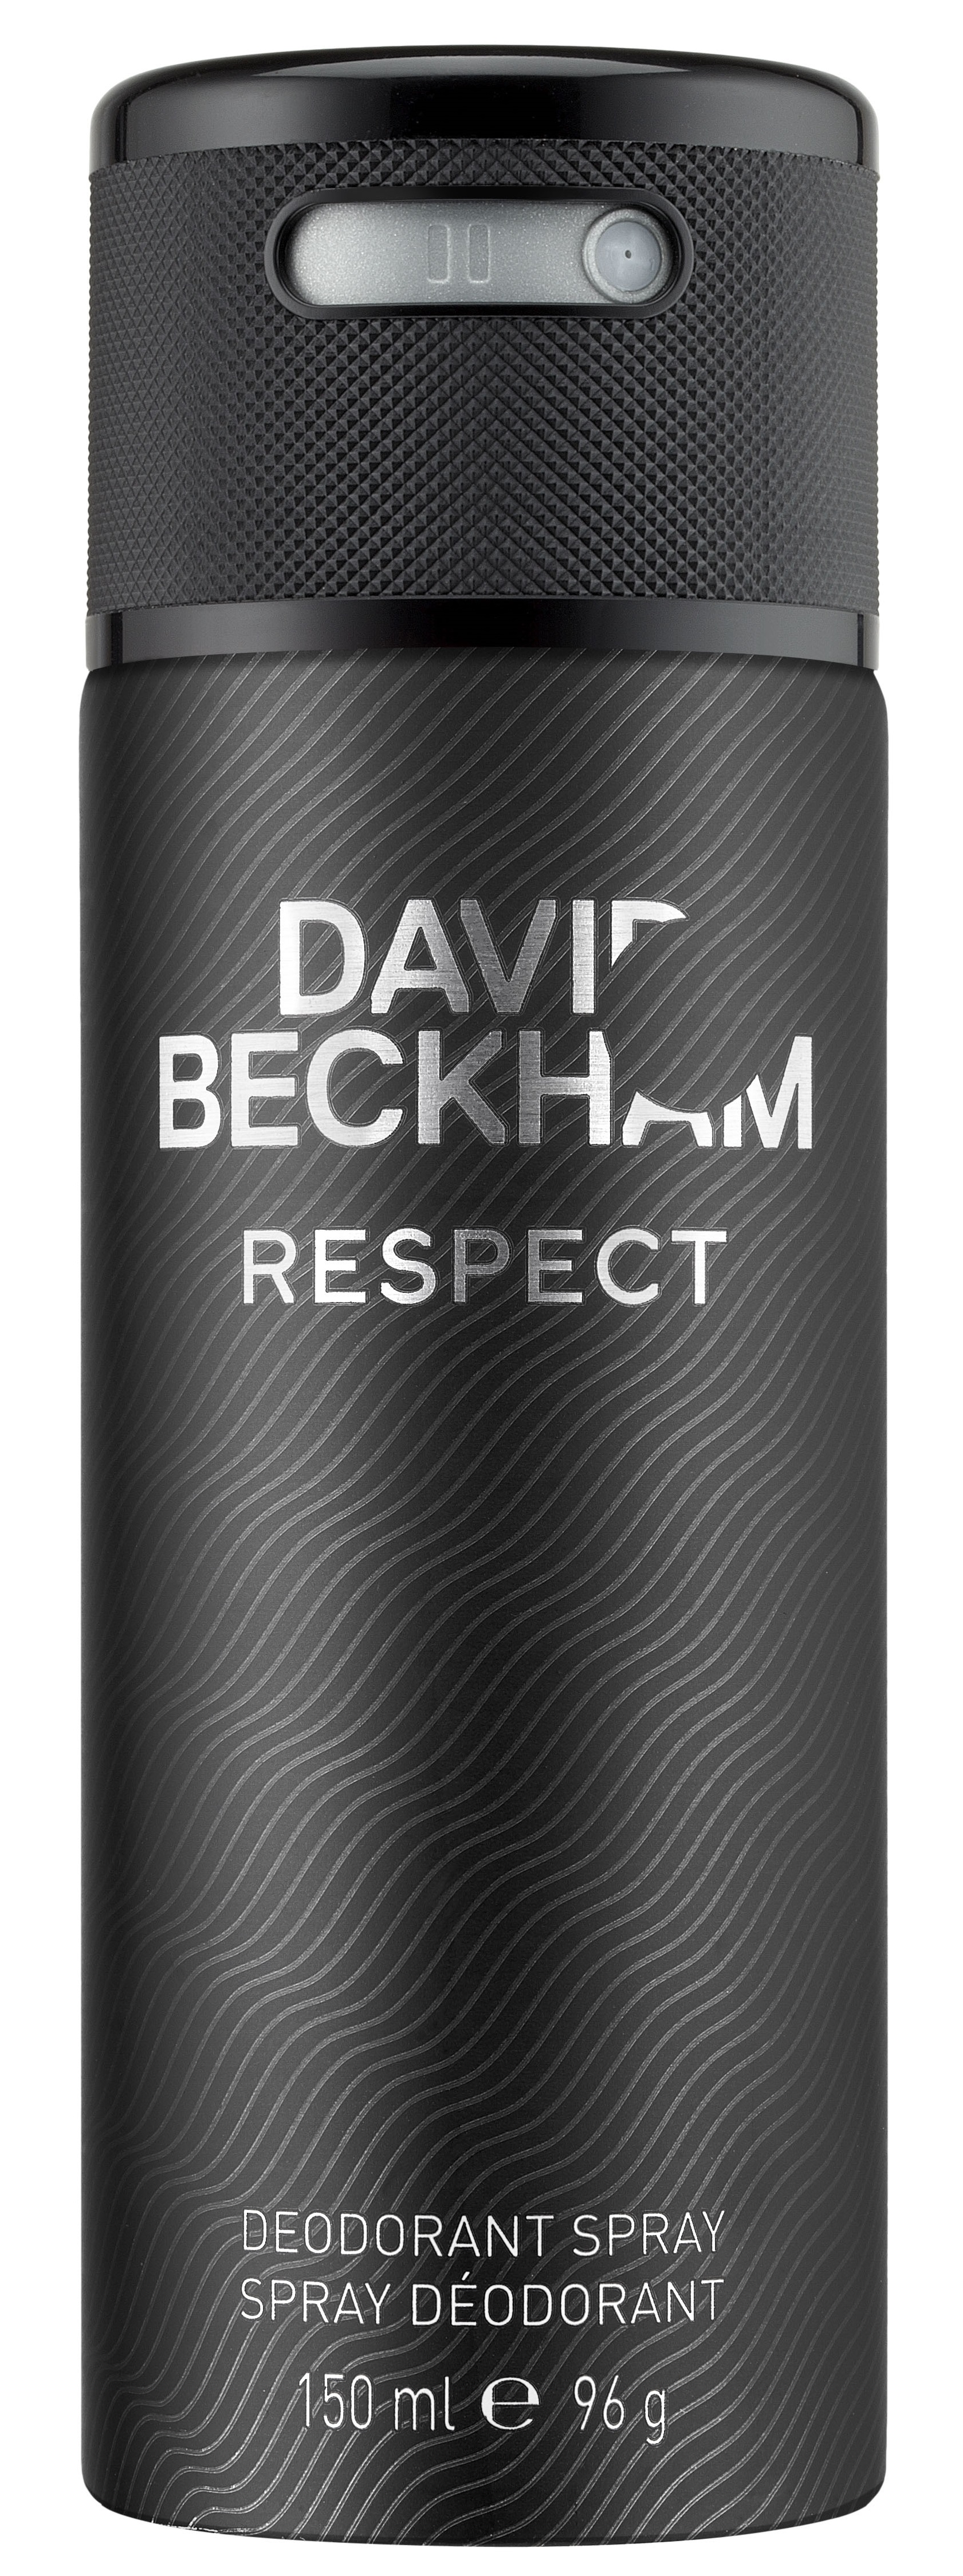 Beckham Respect Deo Spray ml |